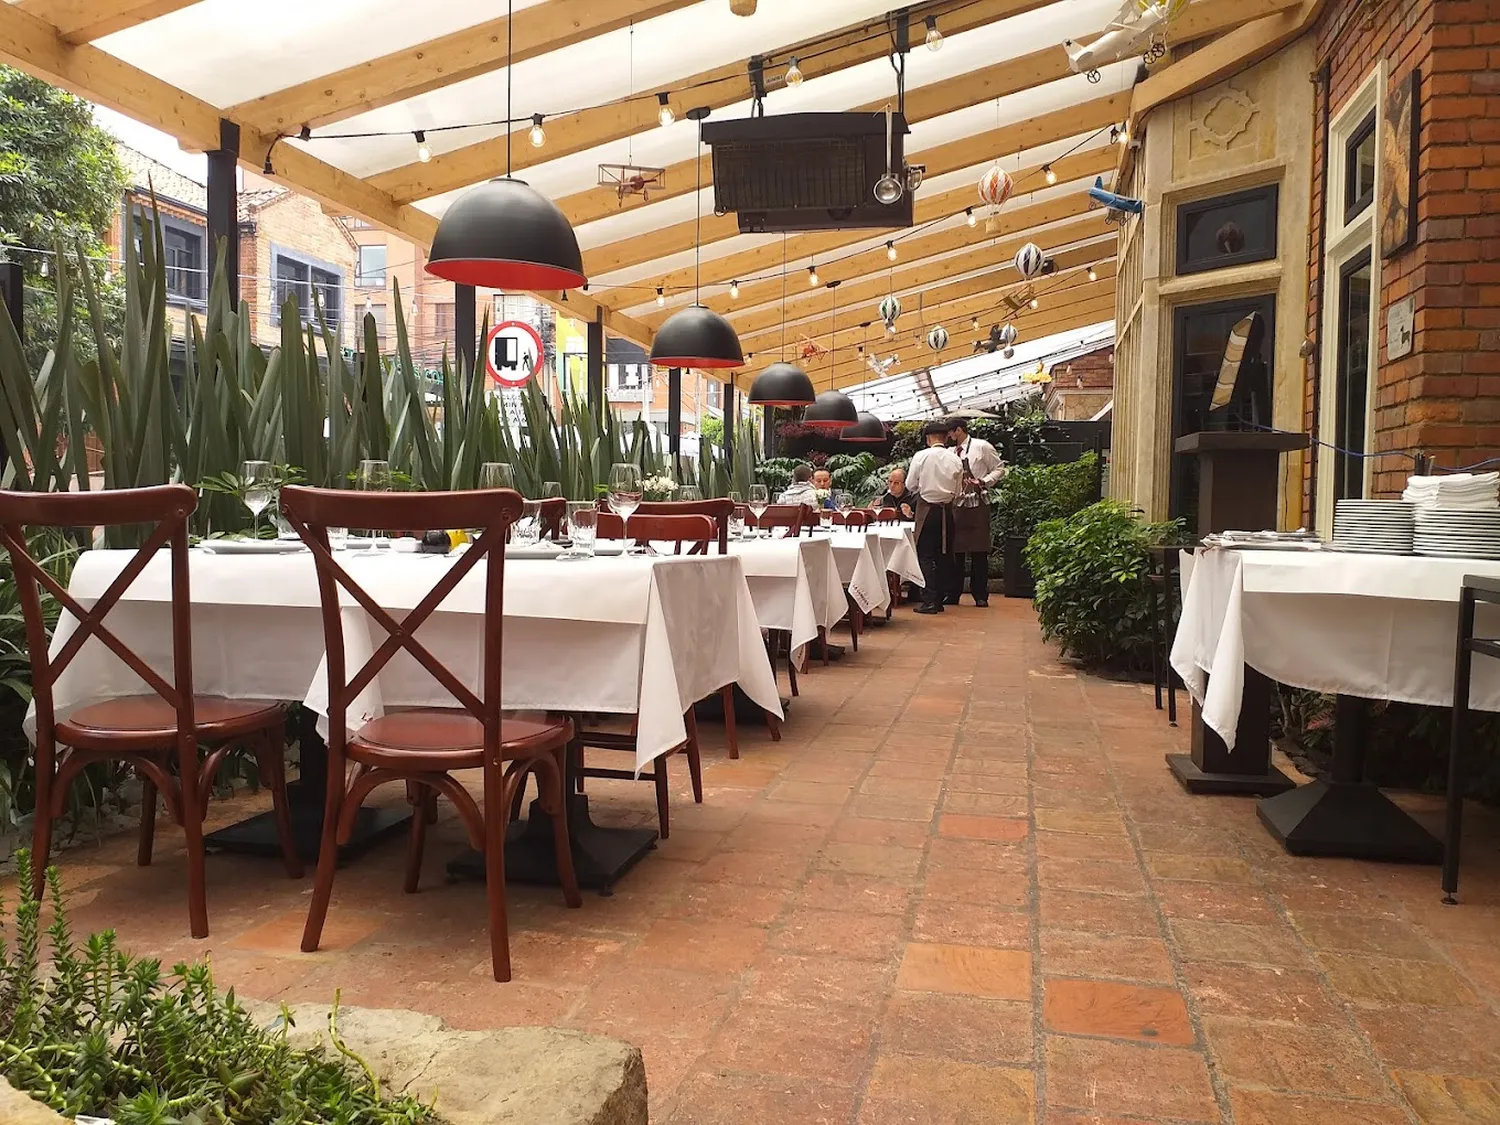 La Cabrera restaurant Bogota